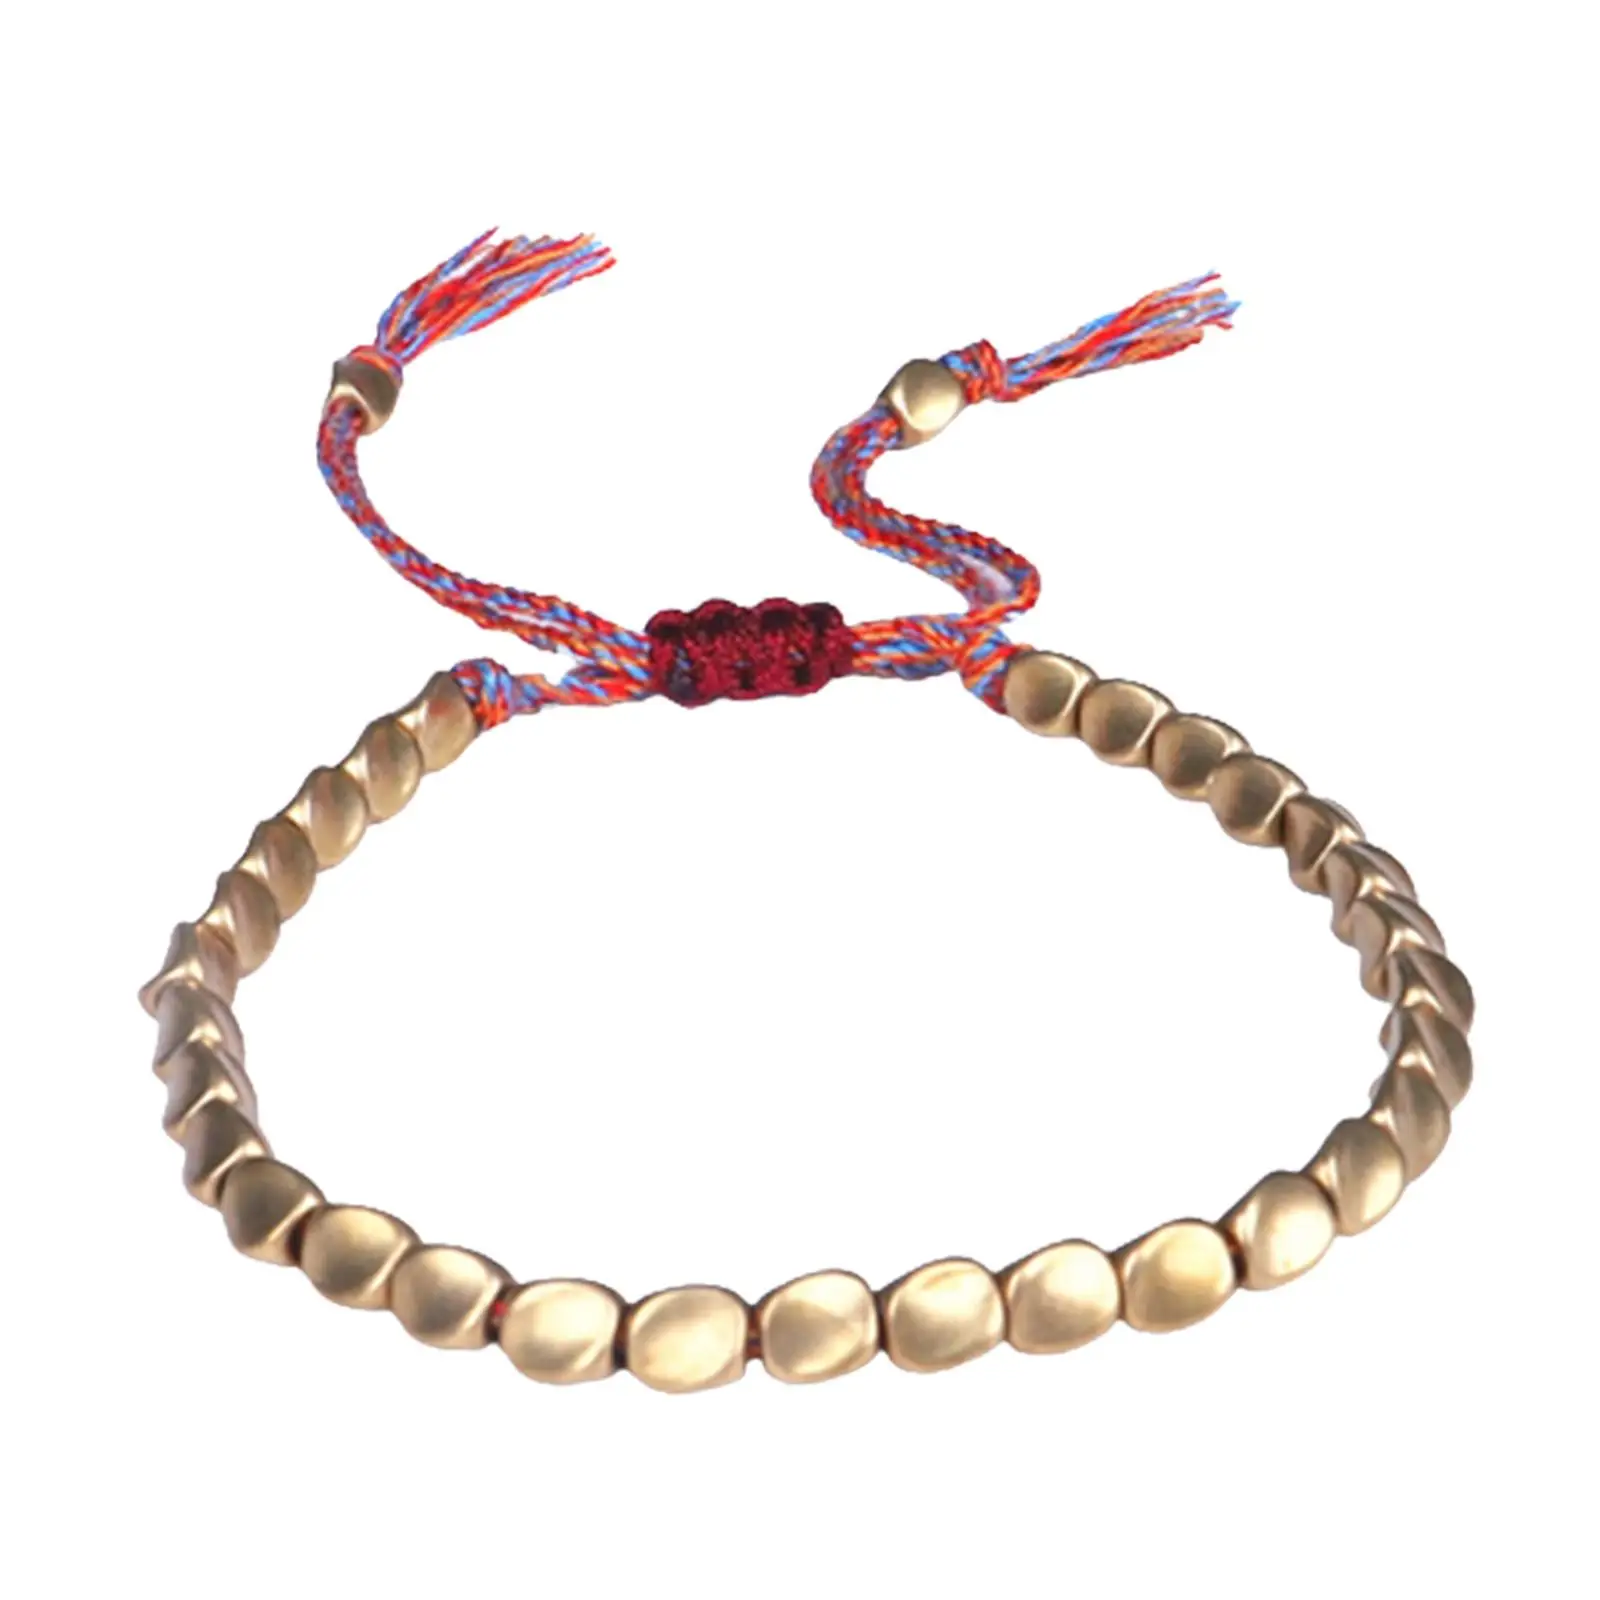 Woven Bracelet Lucky Rope Decoration Charm Delicate for Women Men Boys girl daily wearing